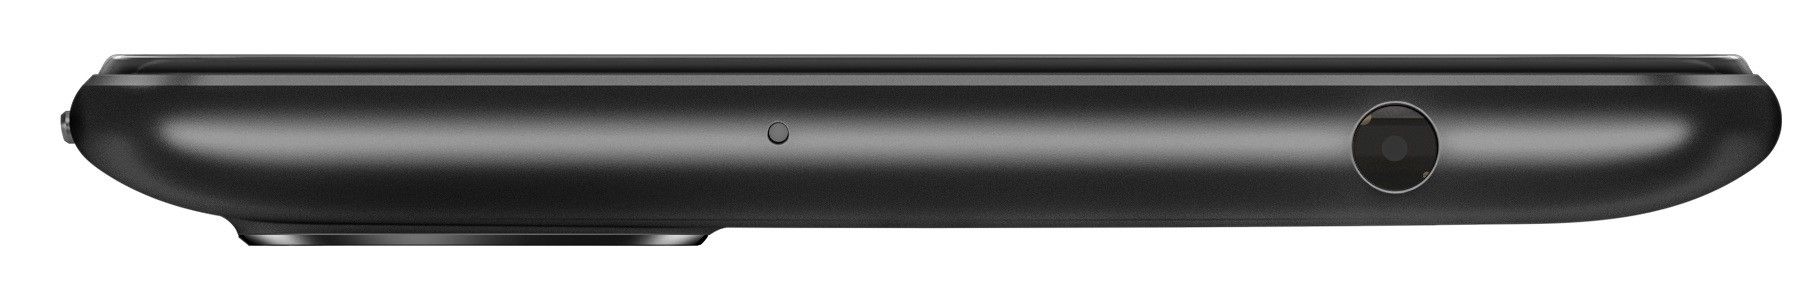 Цена Смартфон Xiaomi Redmi 6A 16Gb Black